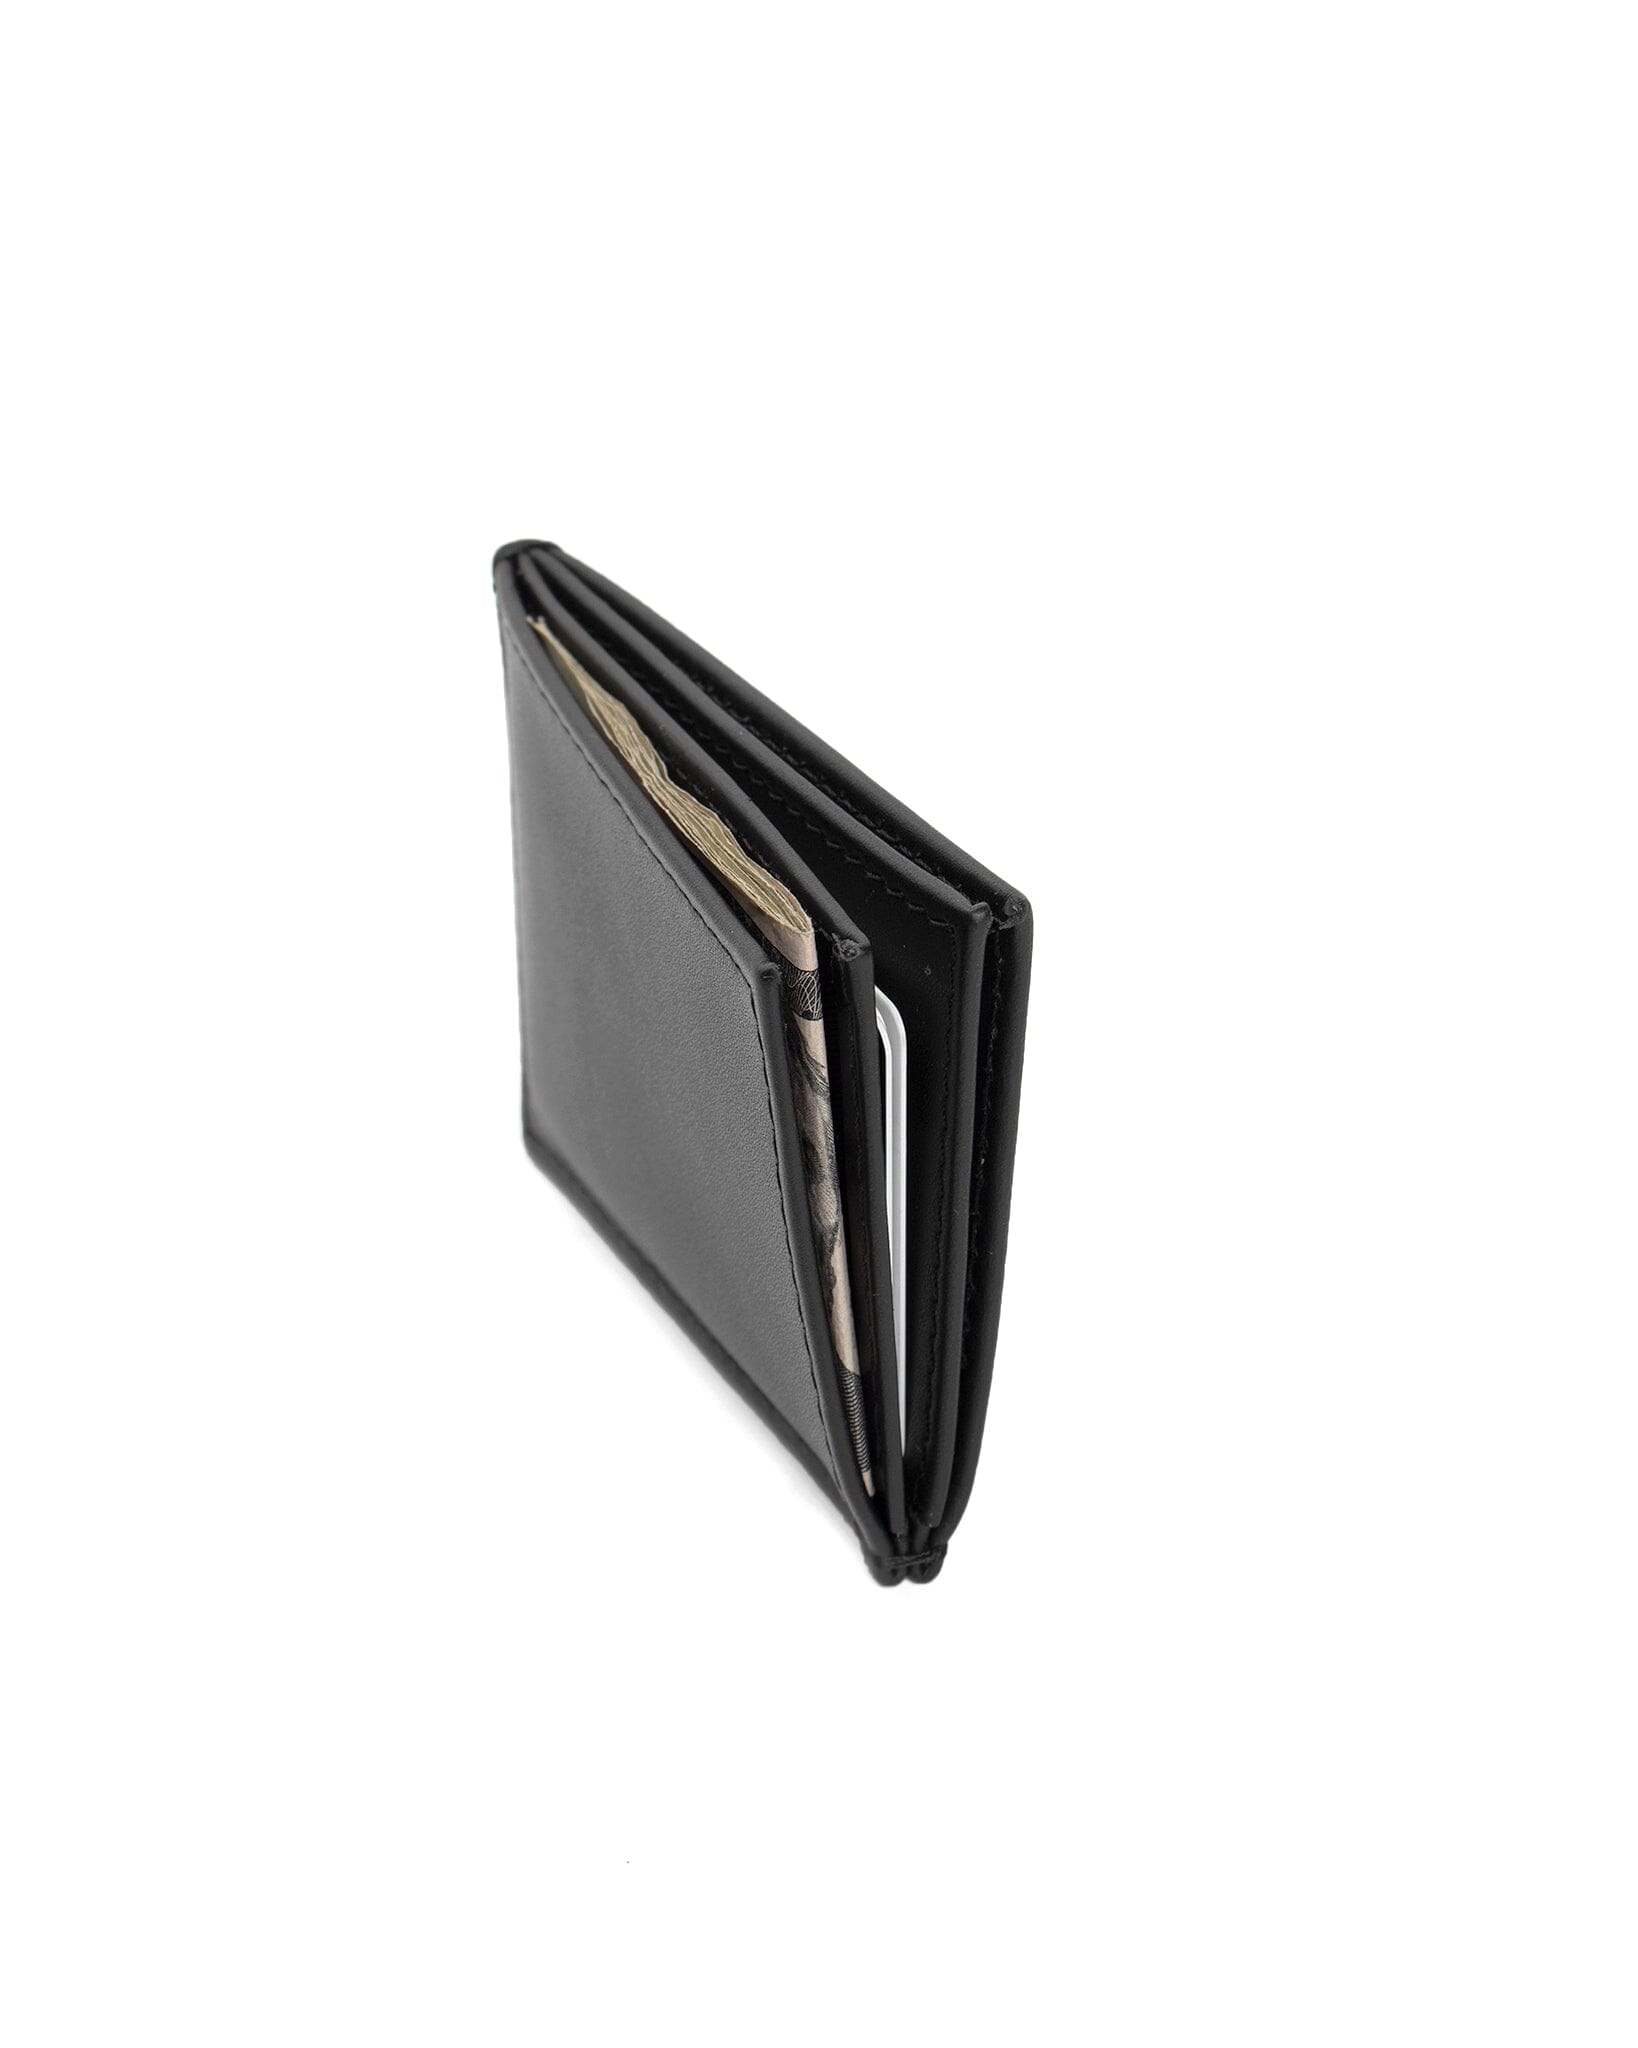 Slimmy OG 3-Pocket (76mm) Slim Minimalist Wallet - Black - RFID EDC